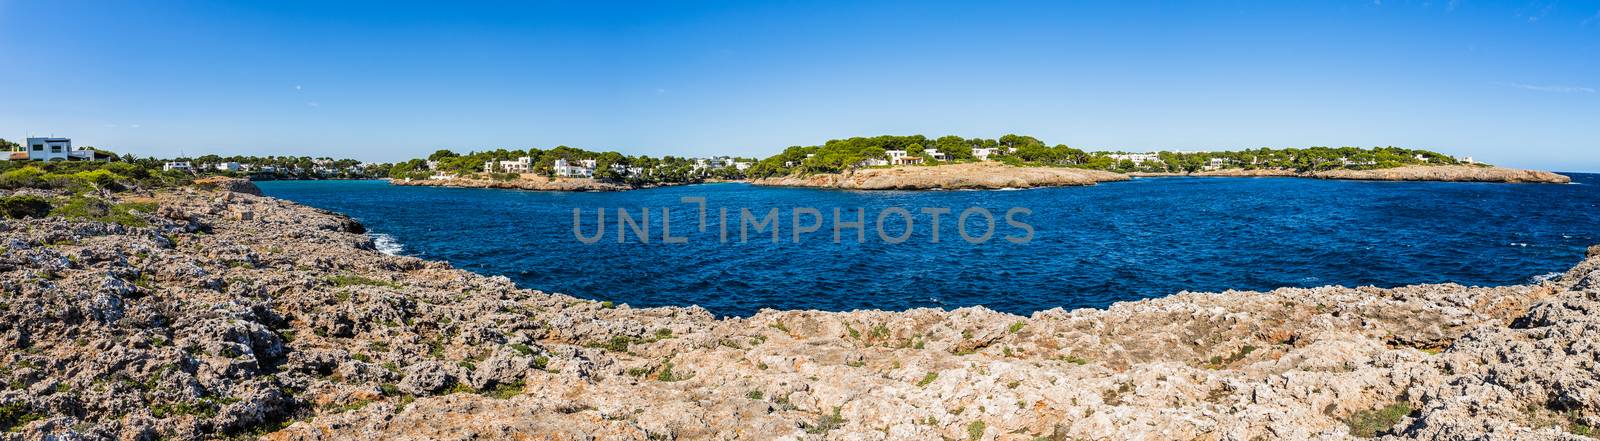 Panorama view of Cala D'Or coast, Majorca island, Spain Mediterranean Sea 